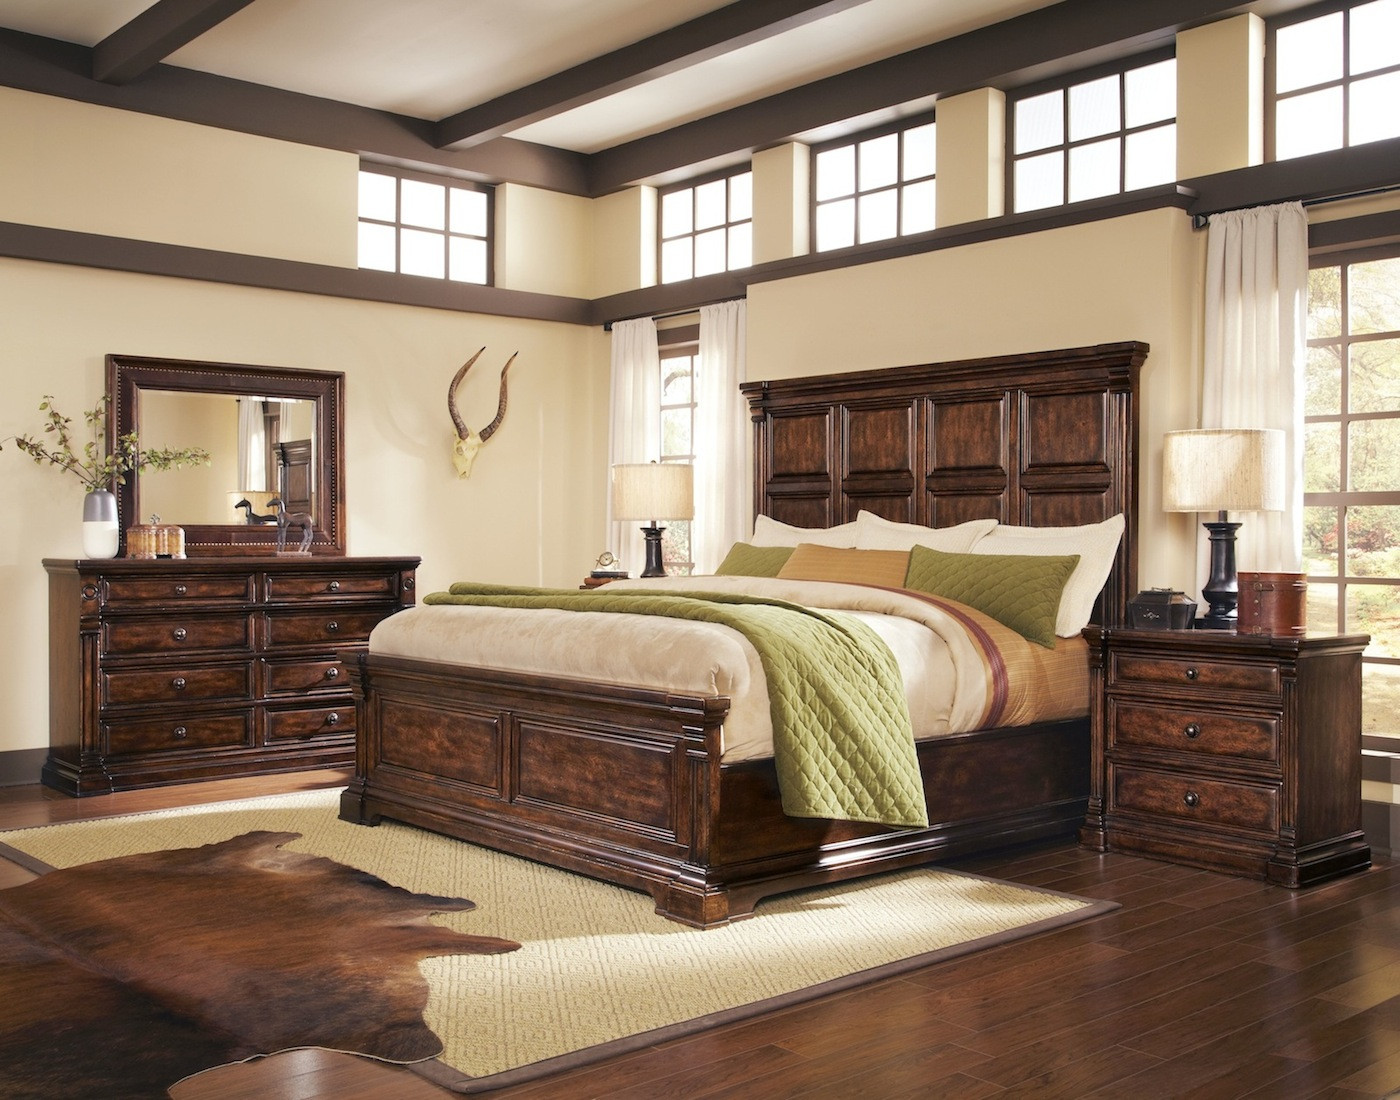 Rustic Wood Bedroom Furniture
 Whiskey Oak Rustic Inspired Wooden Panel Bedroom Set